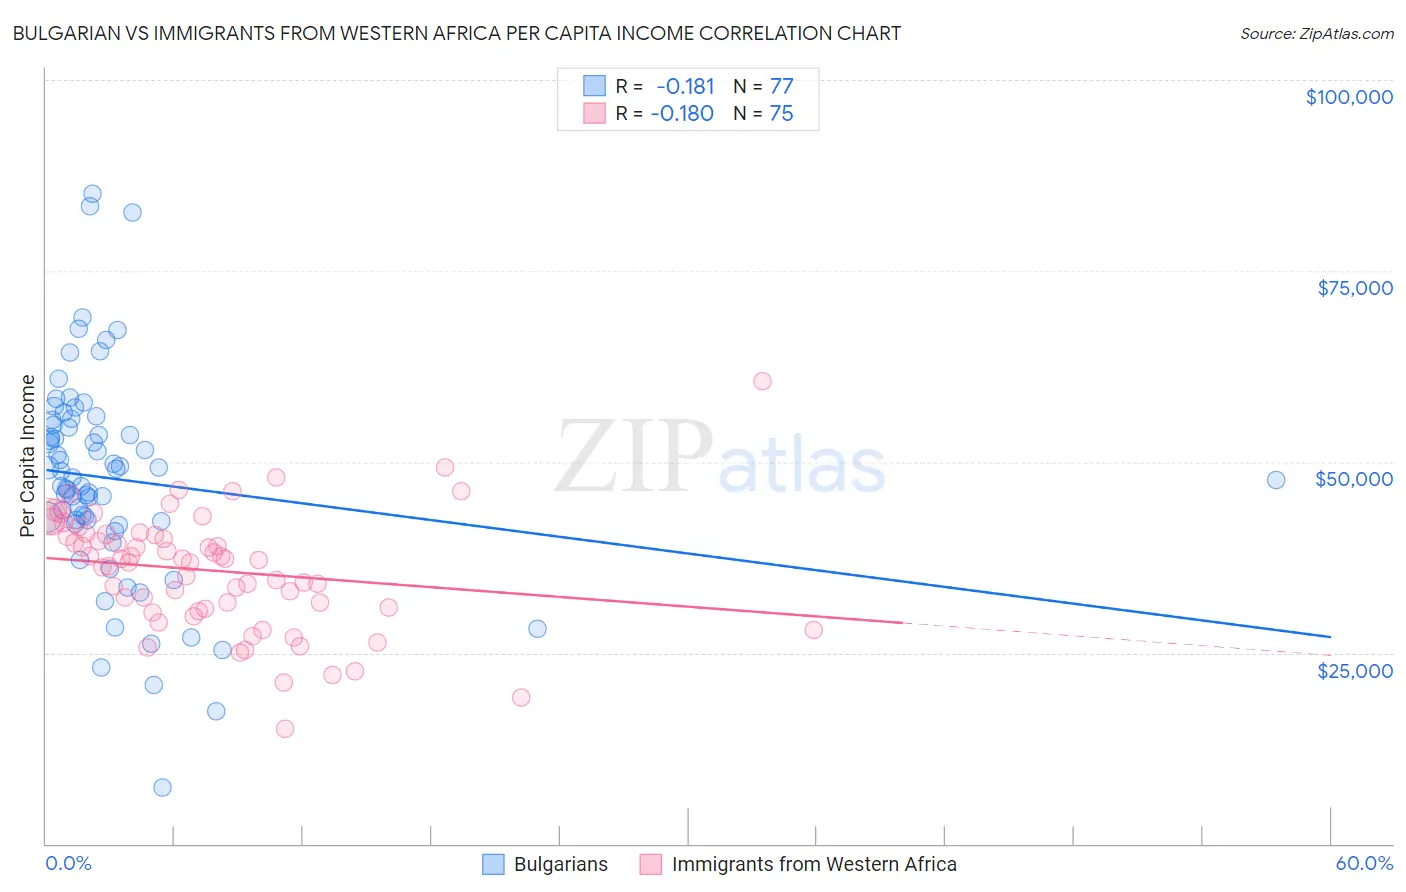 Bulgarian vs Immigrants from Western Africa Per Capita Income